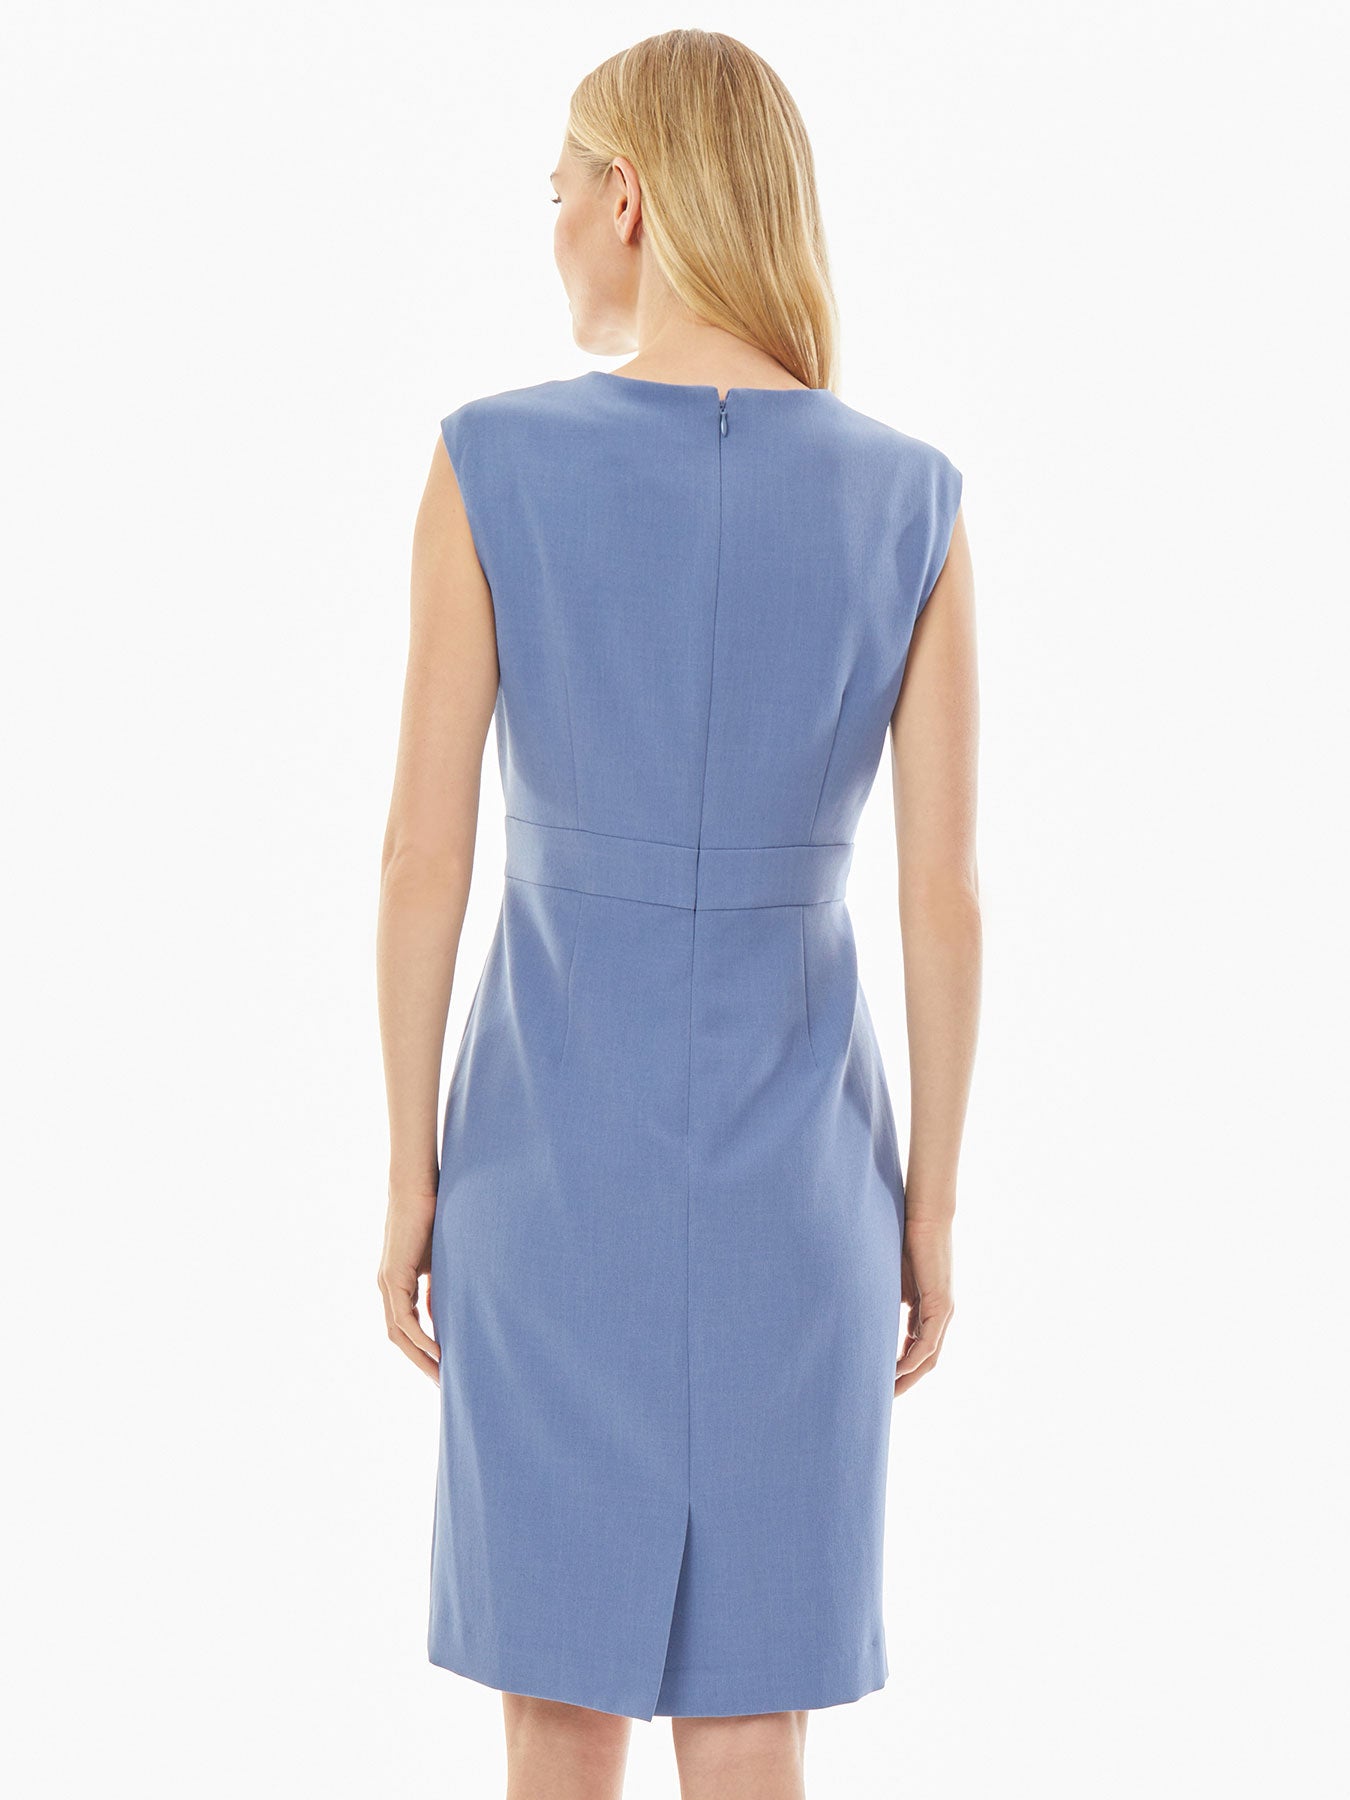 Crepe Dress - Blue Sheath Dress | Kasper